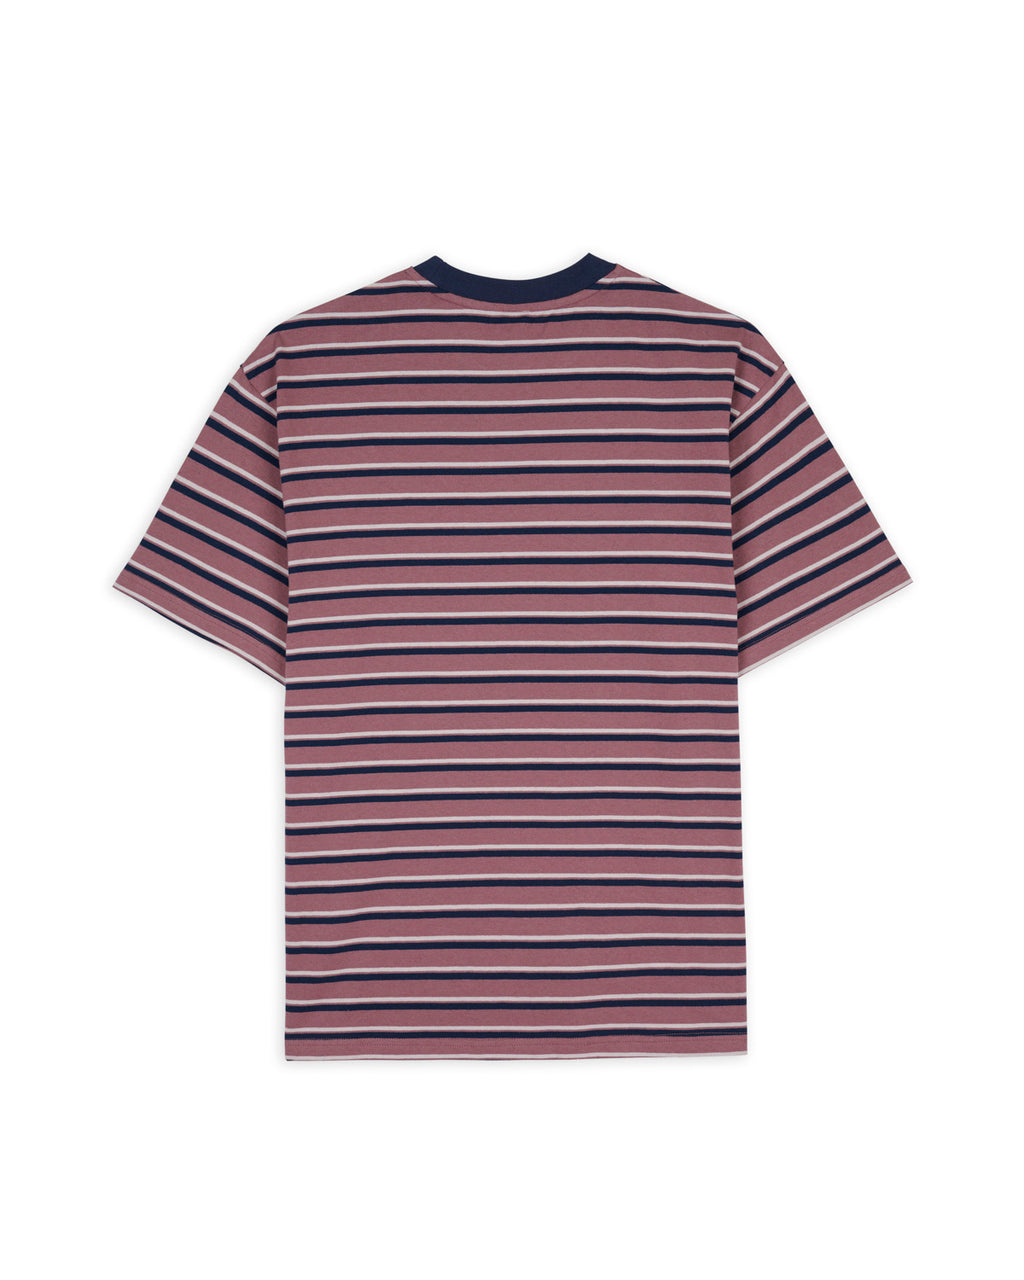 94 Striped T-Shirt - Dusty Rose Multi 2